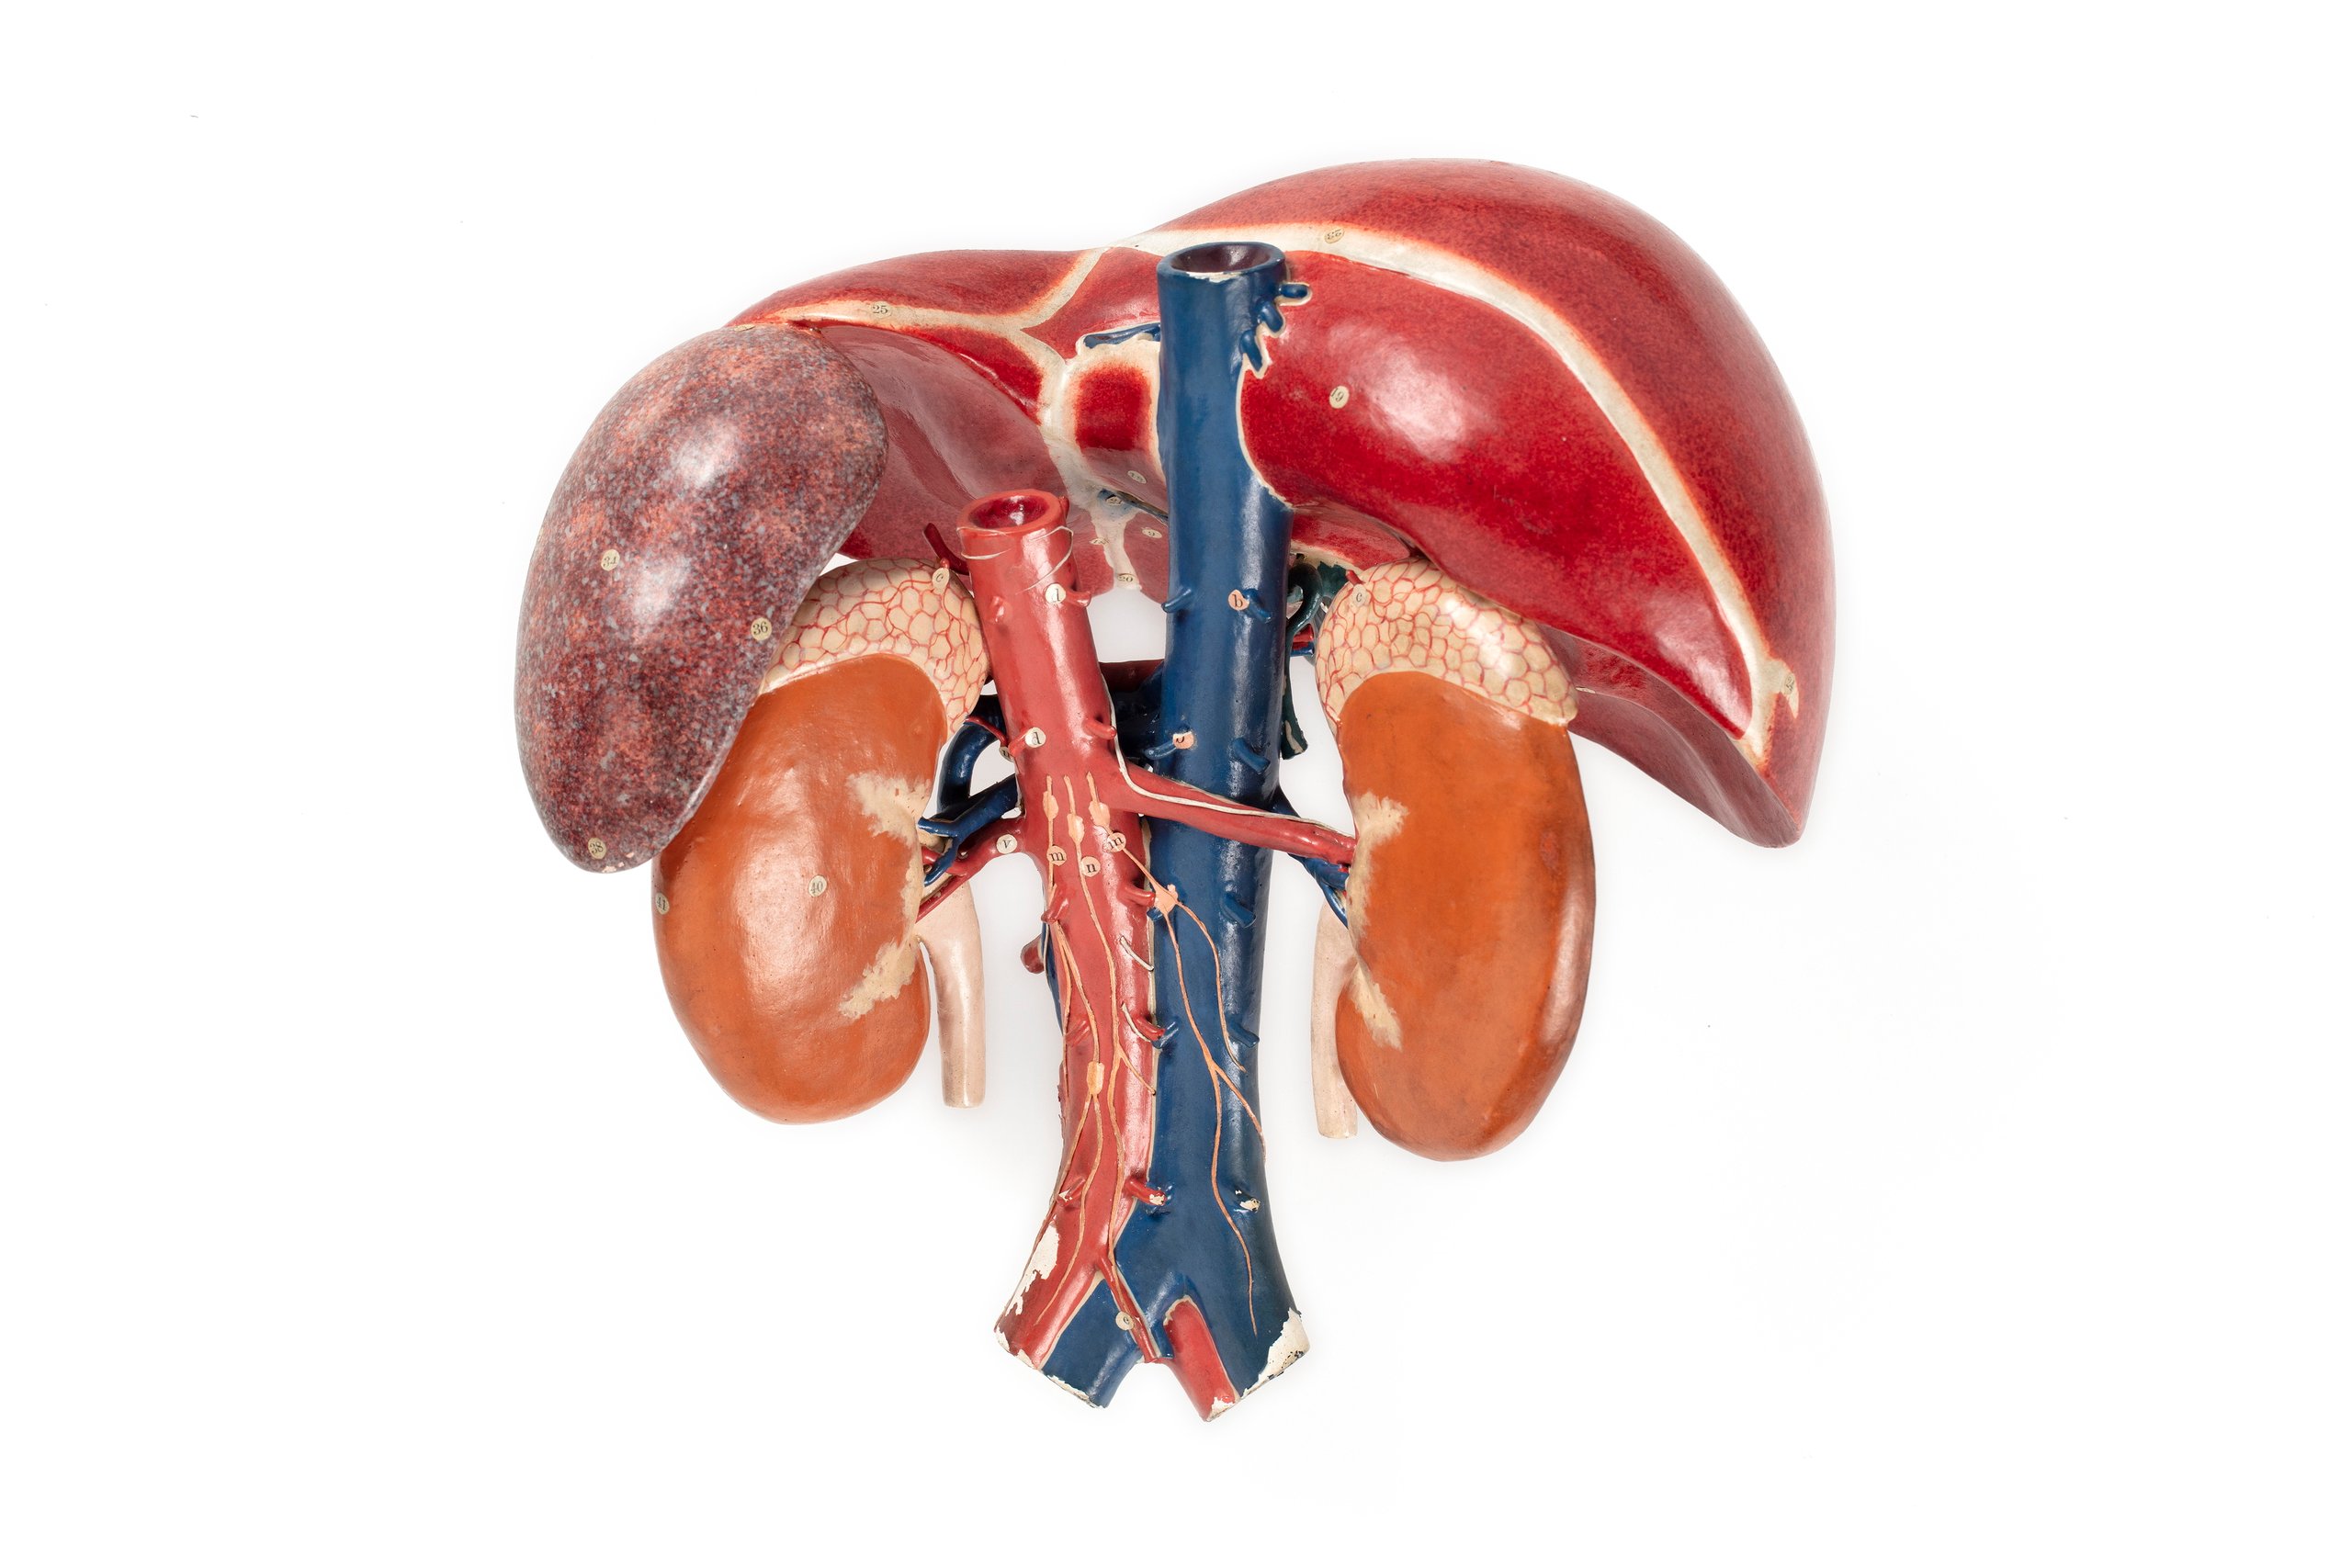 Anatomical model of human organs